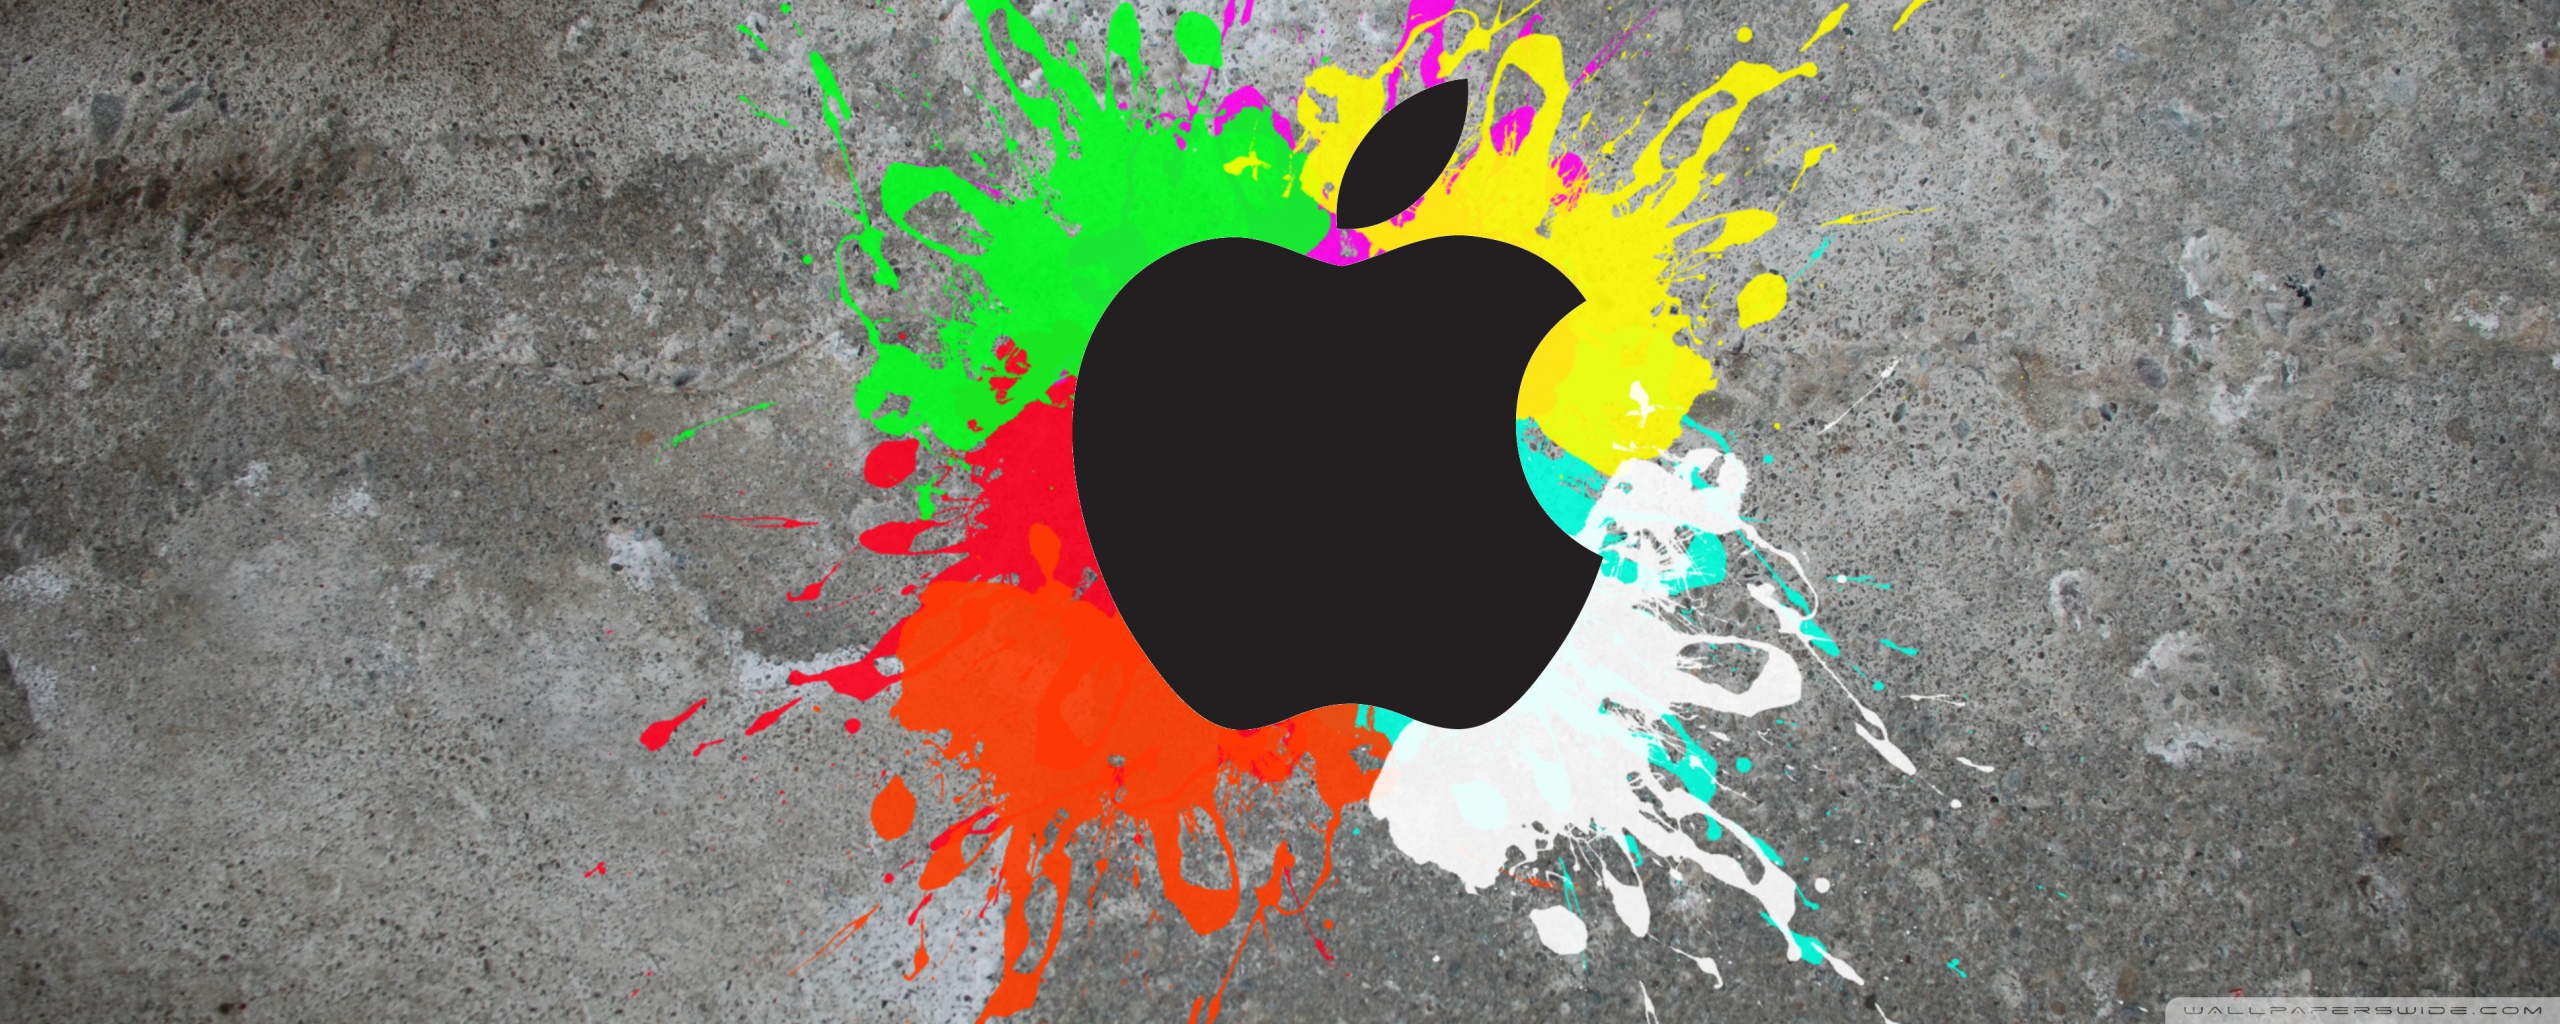 Colorful Apple HD desktop wallpaper : Widescreen : High Definition ...